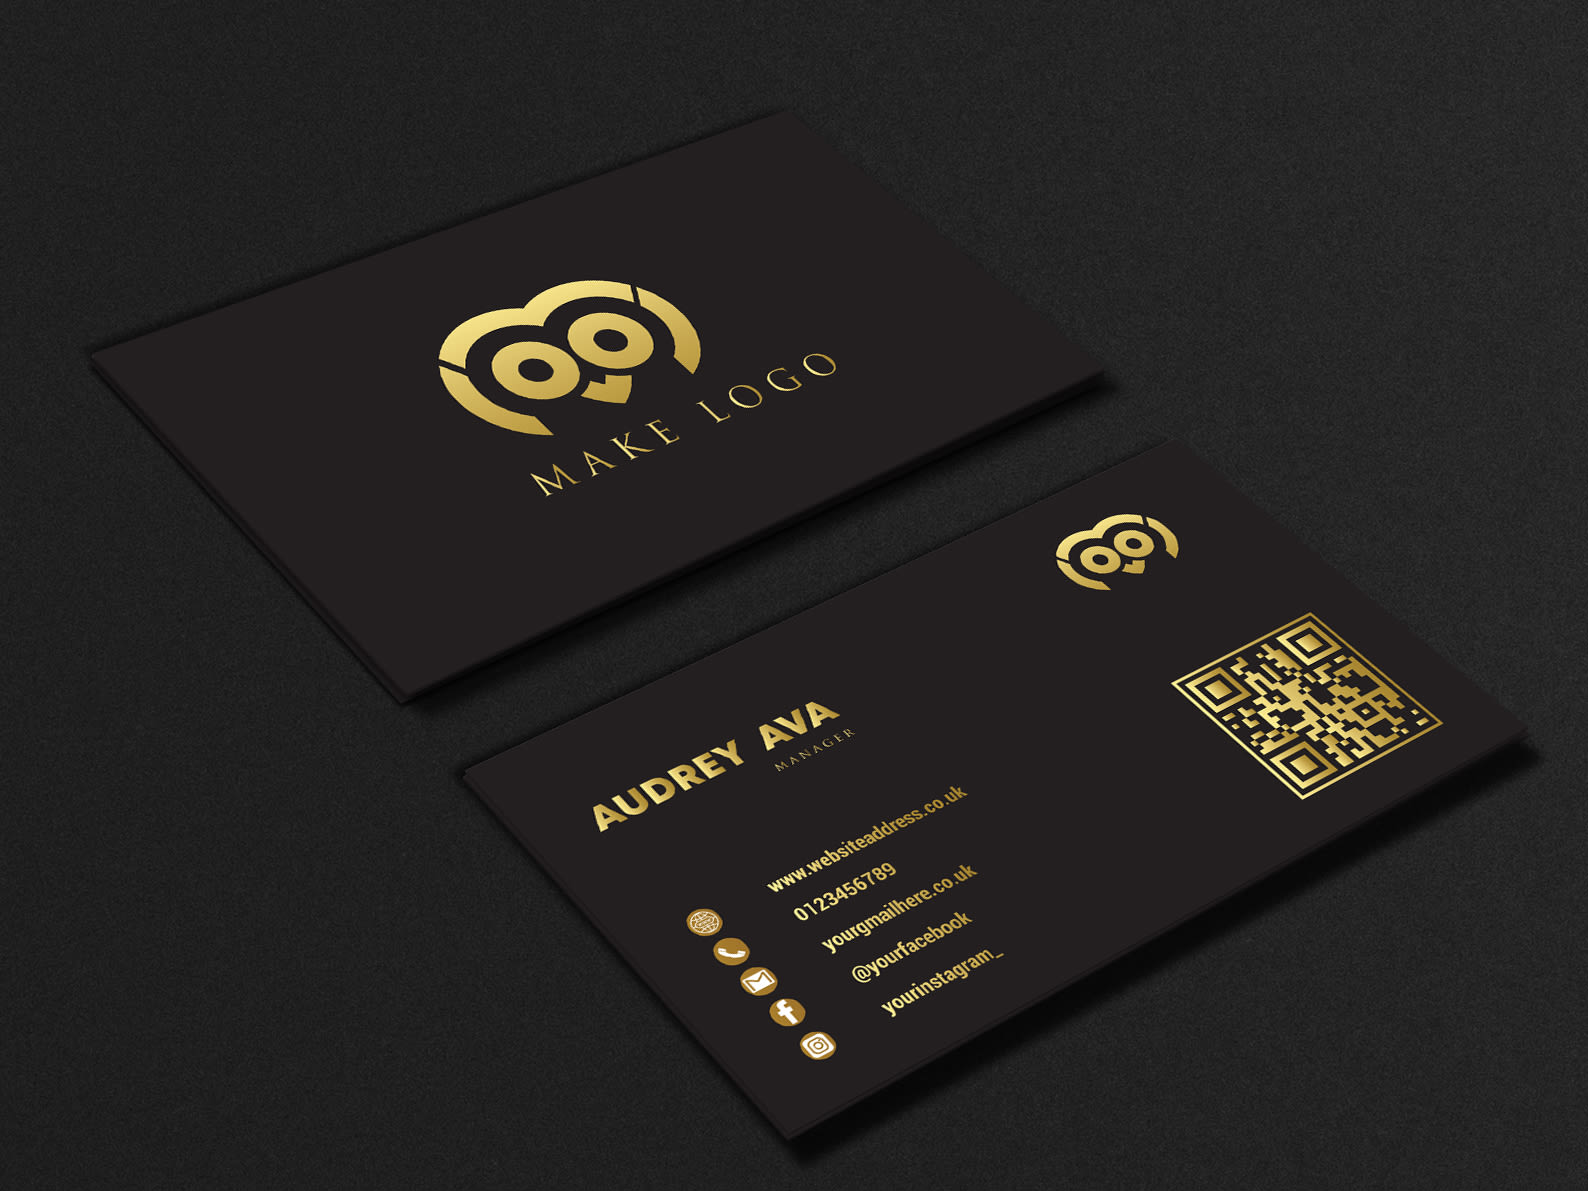 Make creative moo design, vista print, gold foil, business card by Within Vista Print Business Card Template